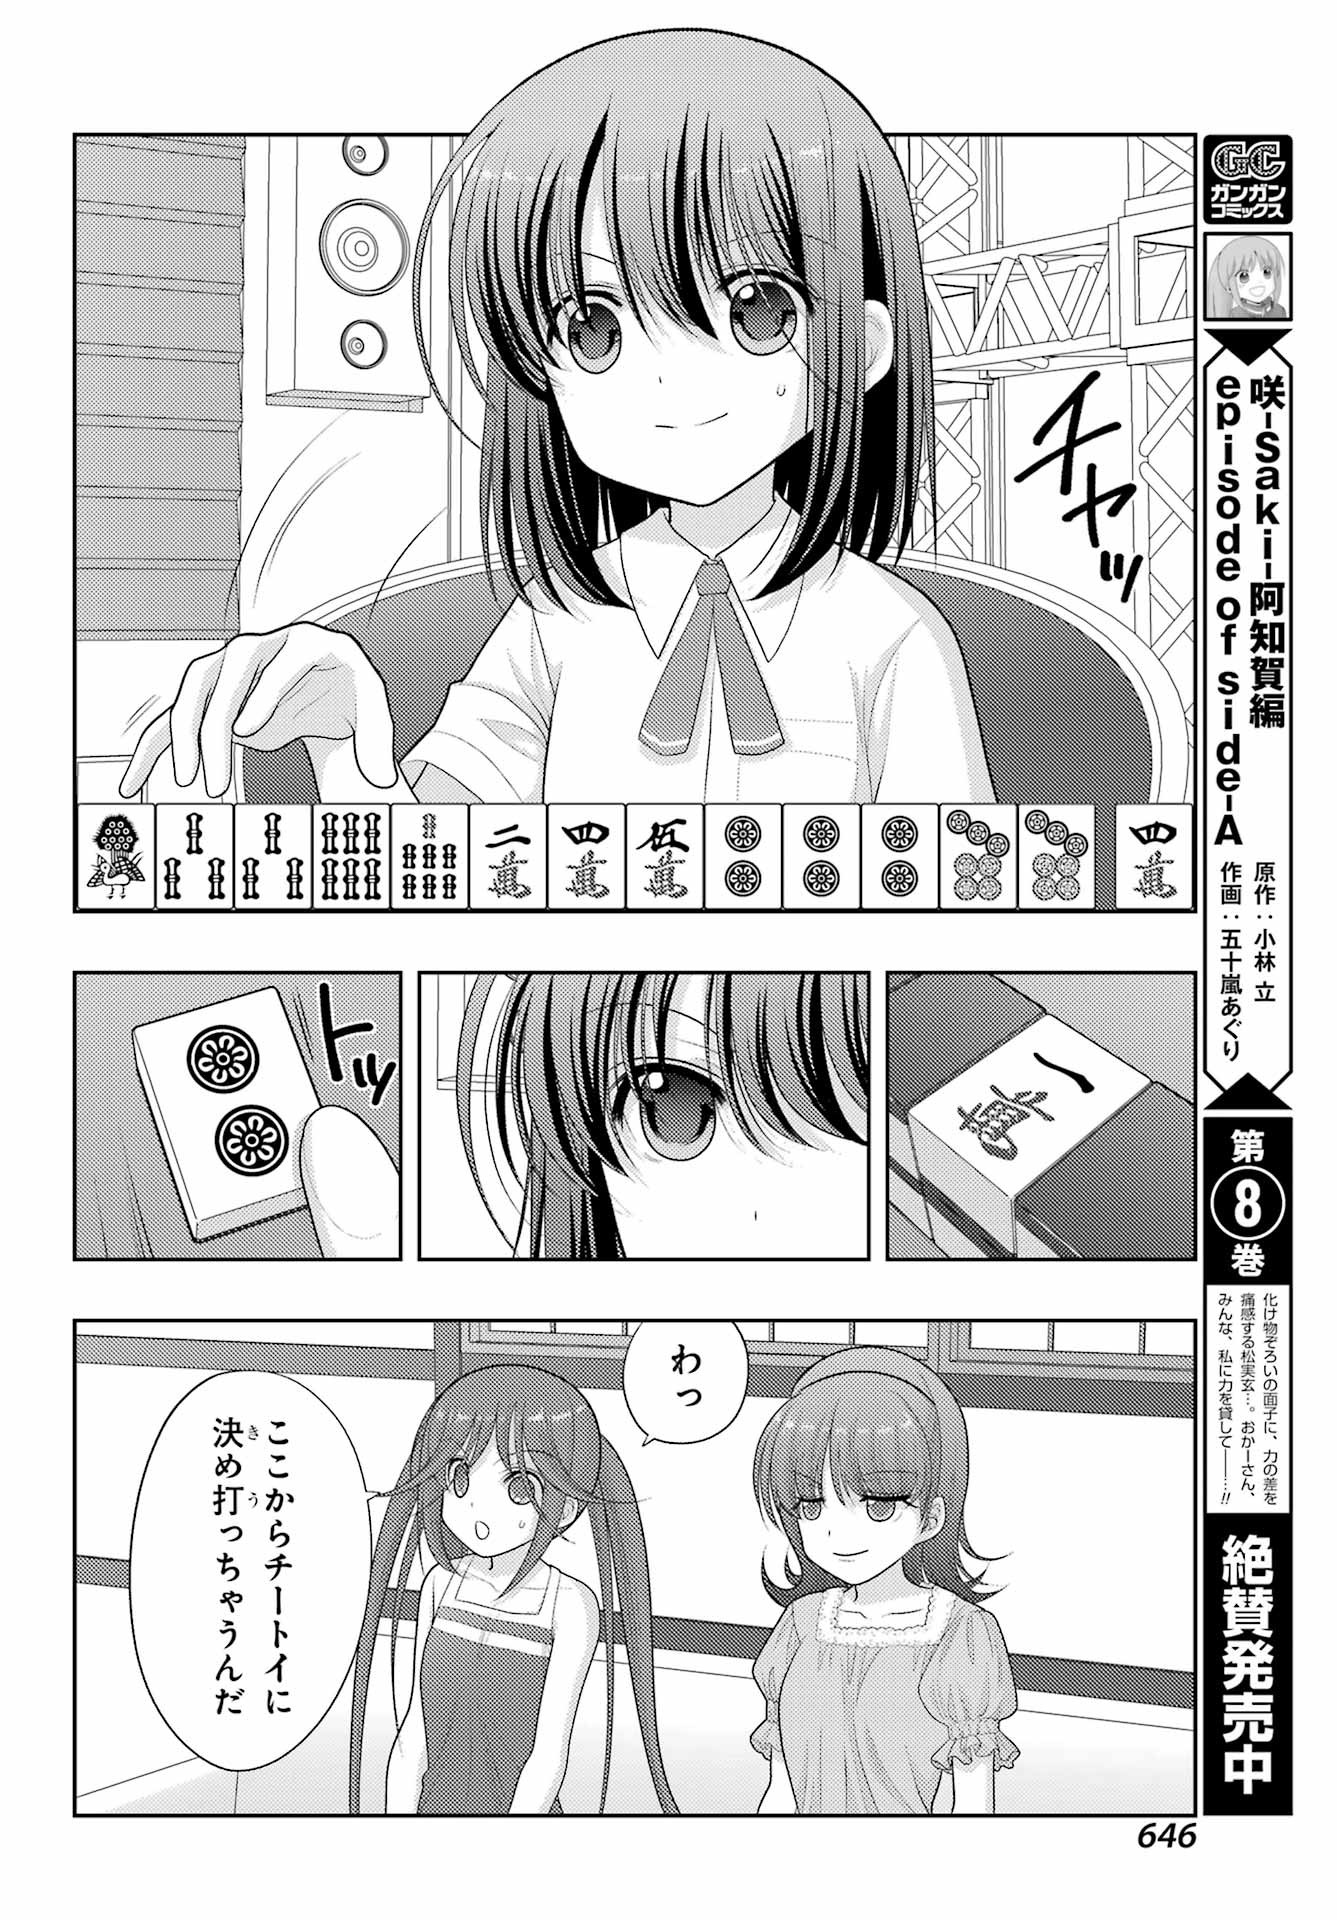 Shinohayu - The Dawn of Age Manga - Chapter 097 - Page 4